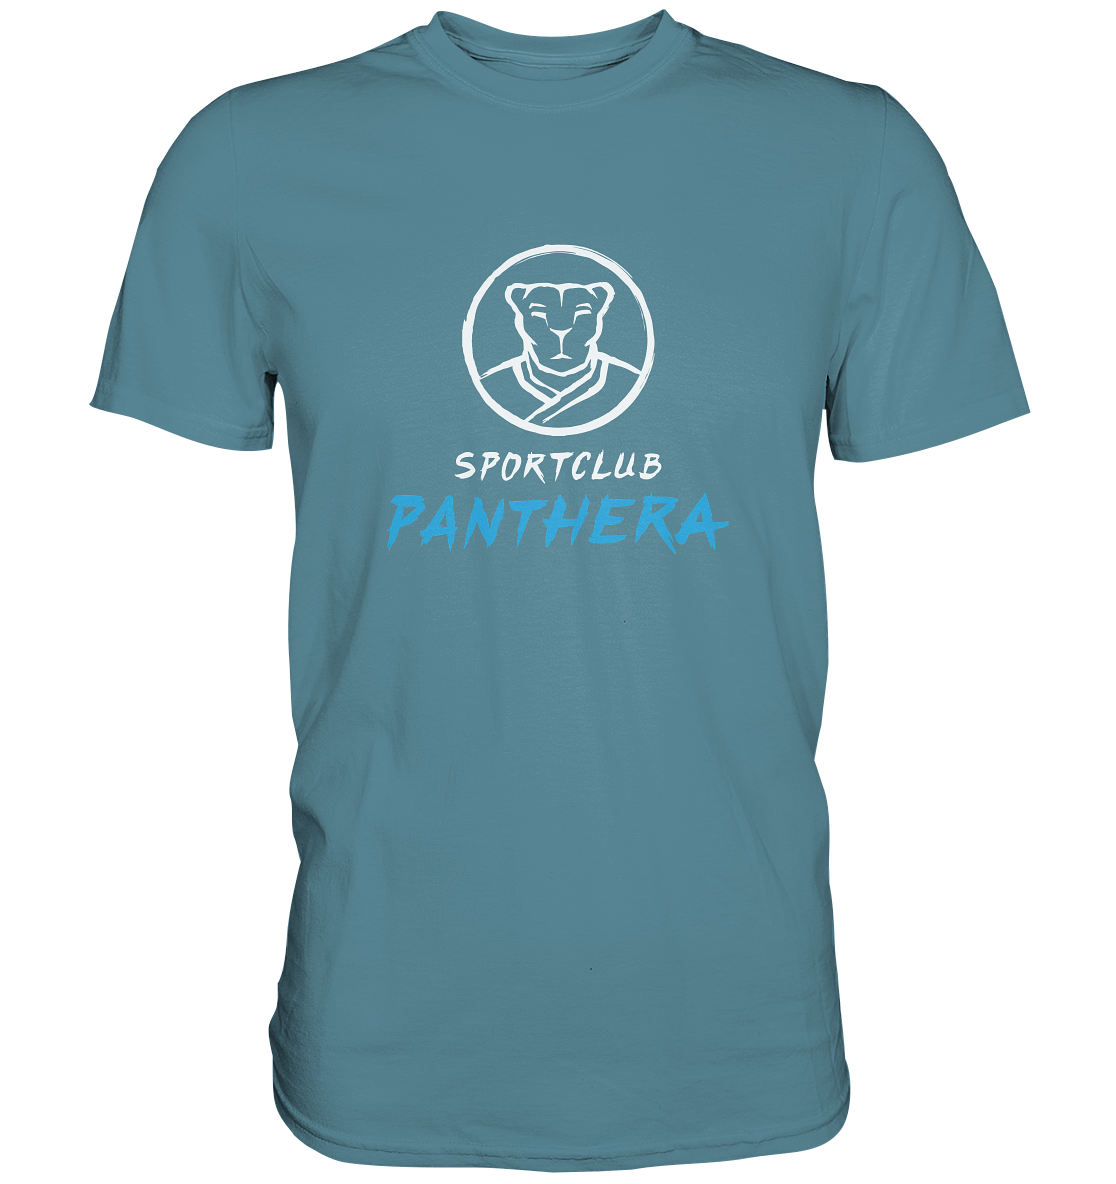 SPORTCLUB PANTHERA - Basic Shirt